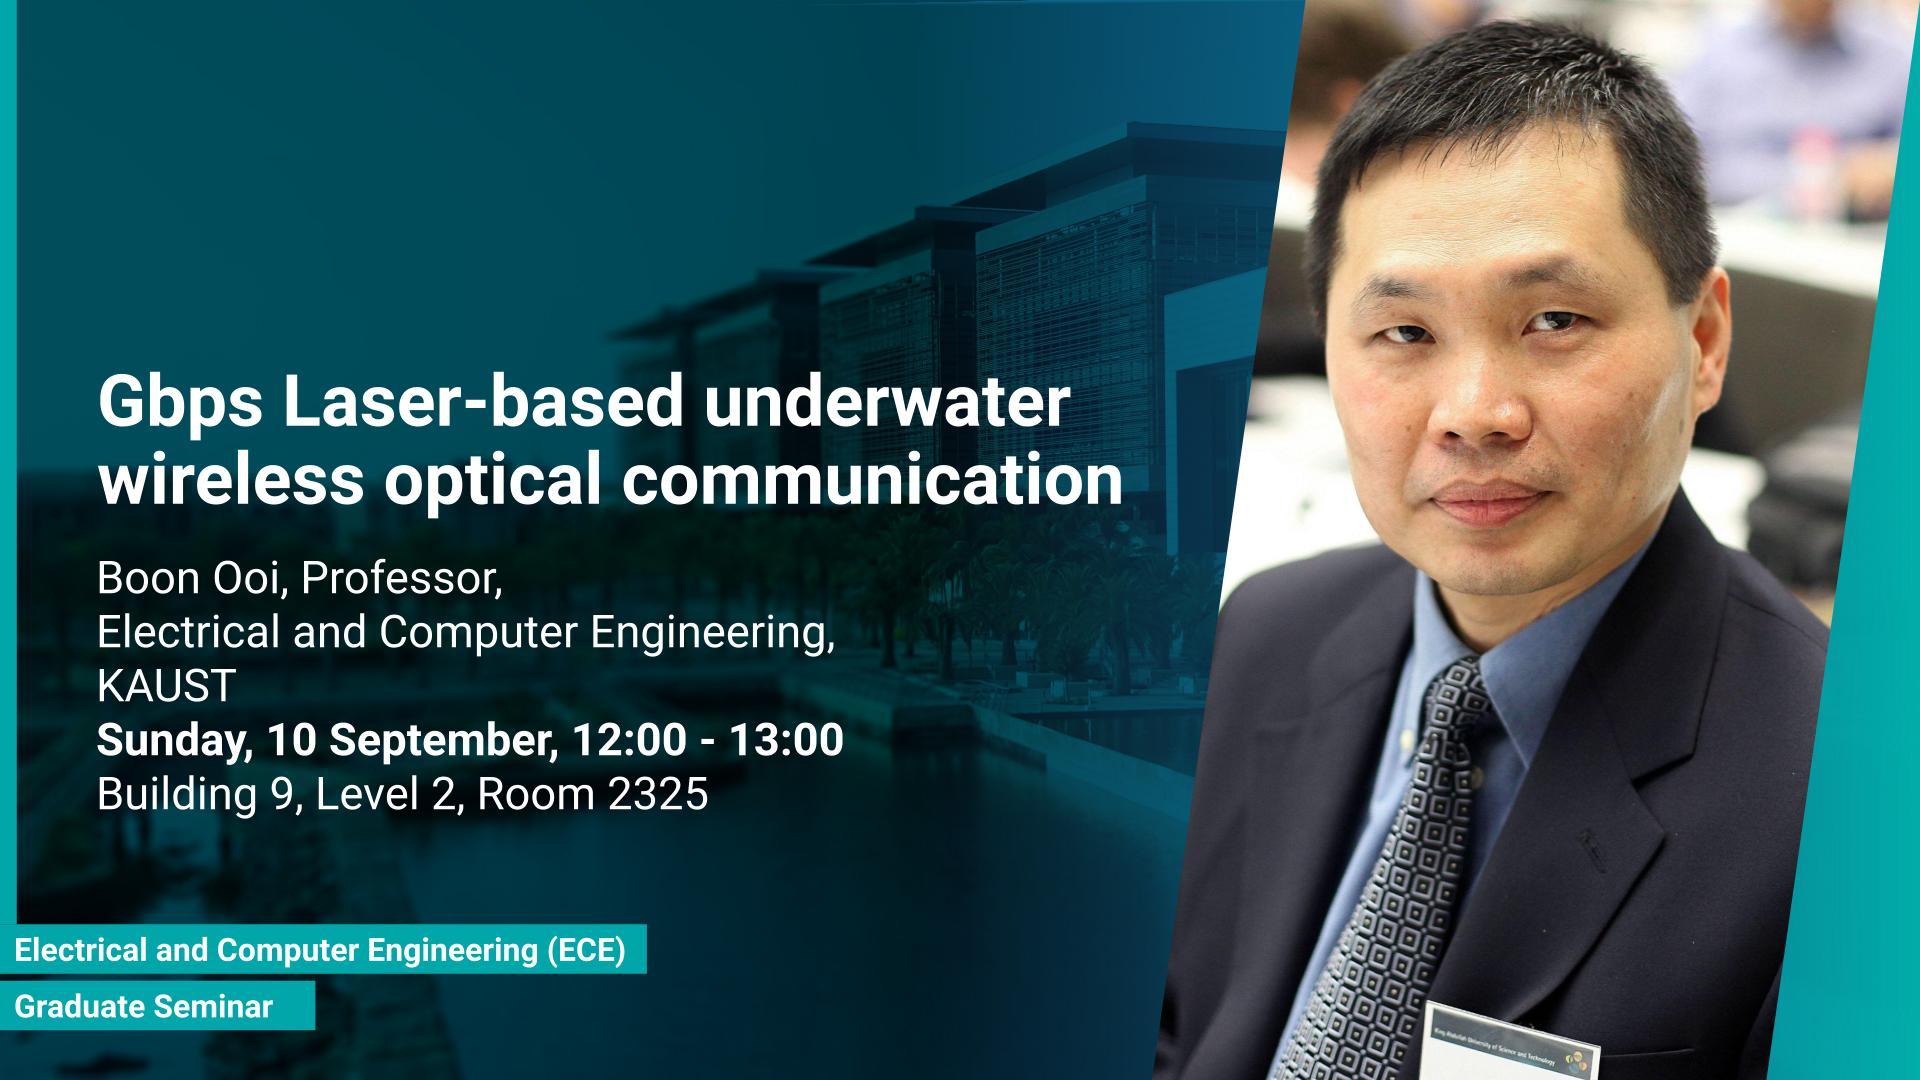 KAUST-CEMSE-ECE-Graduate-Seminar-Boon-S. Ooi-Gbps-Laser-based-underwater-wireless-optical-communication